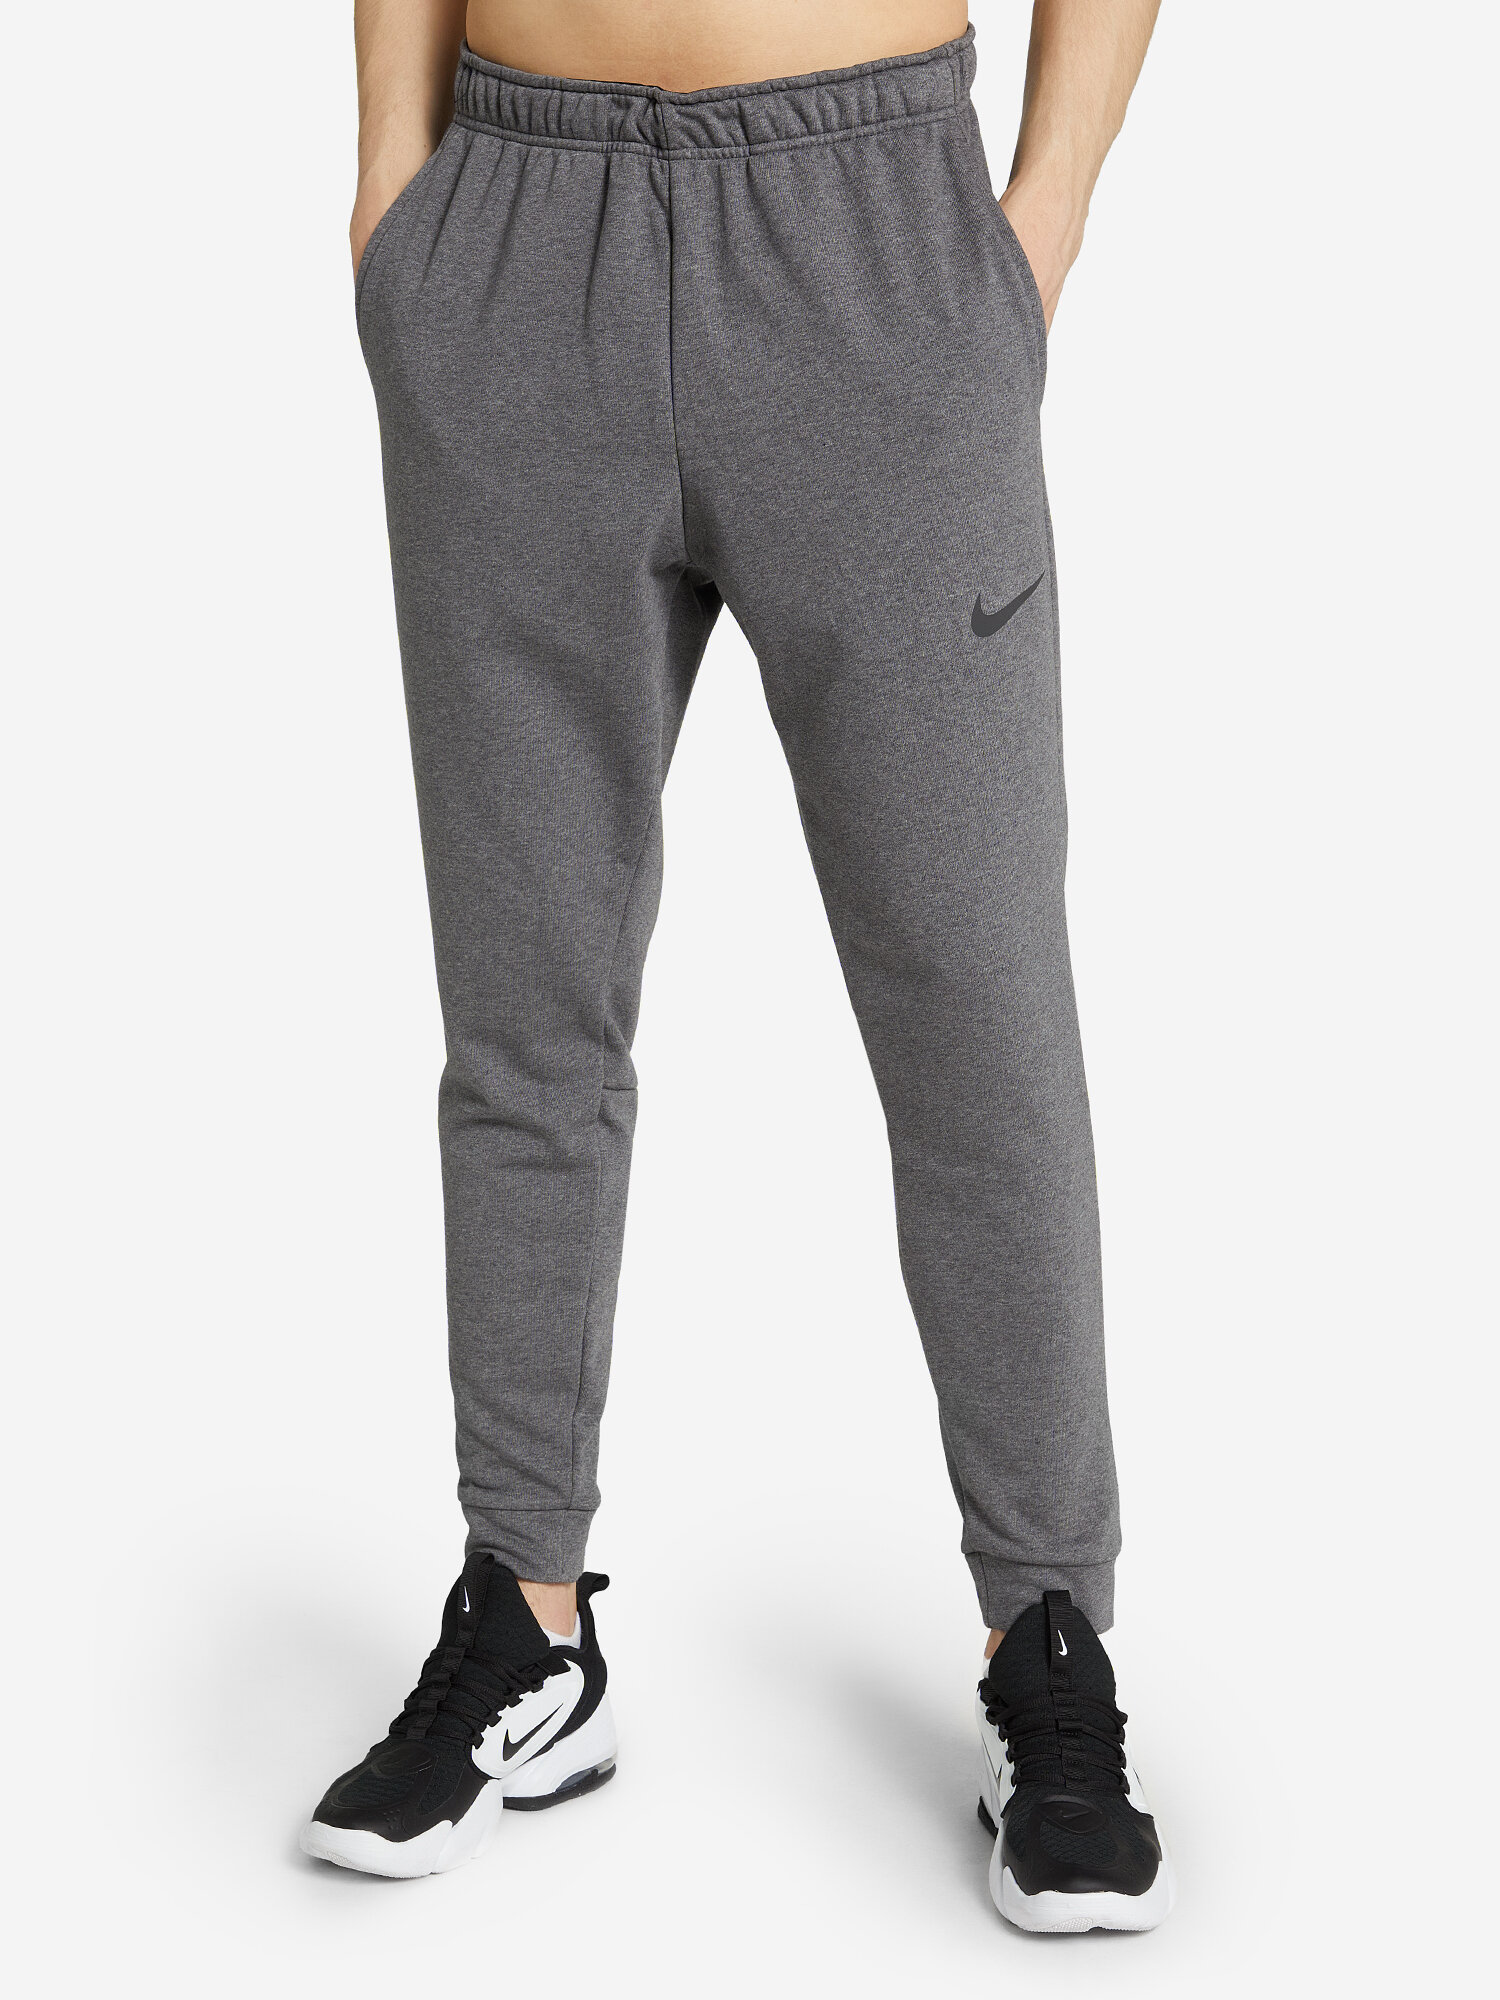 Nike dri fit academy штаны — купить по низкой цене на Яндекс Маркете